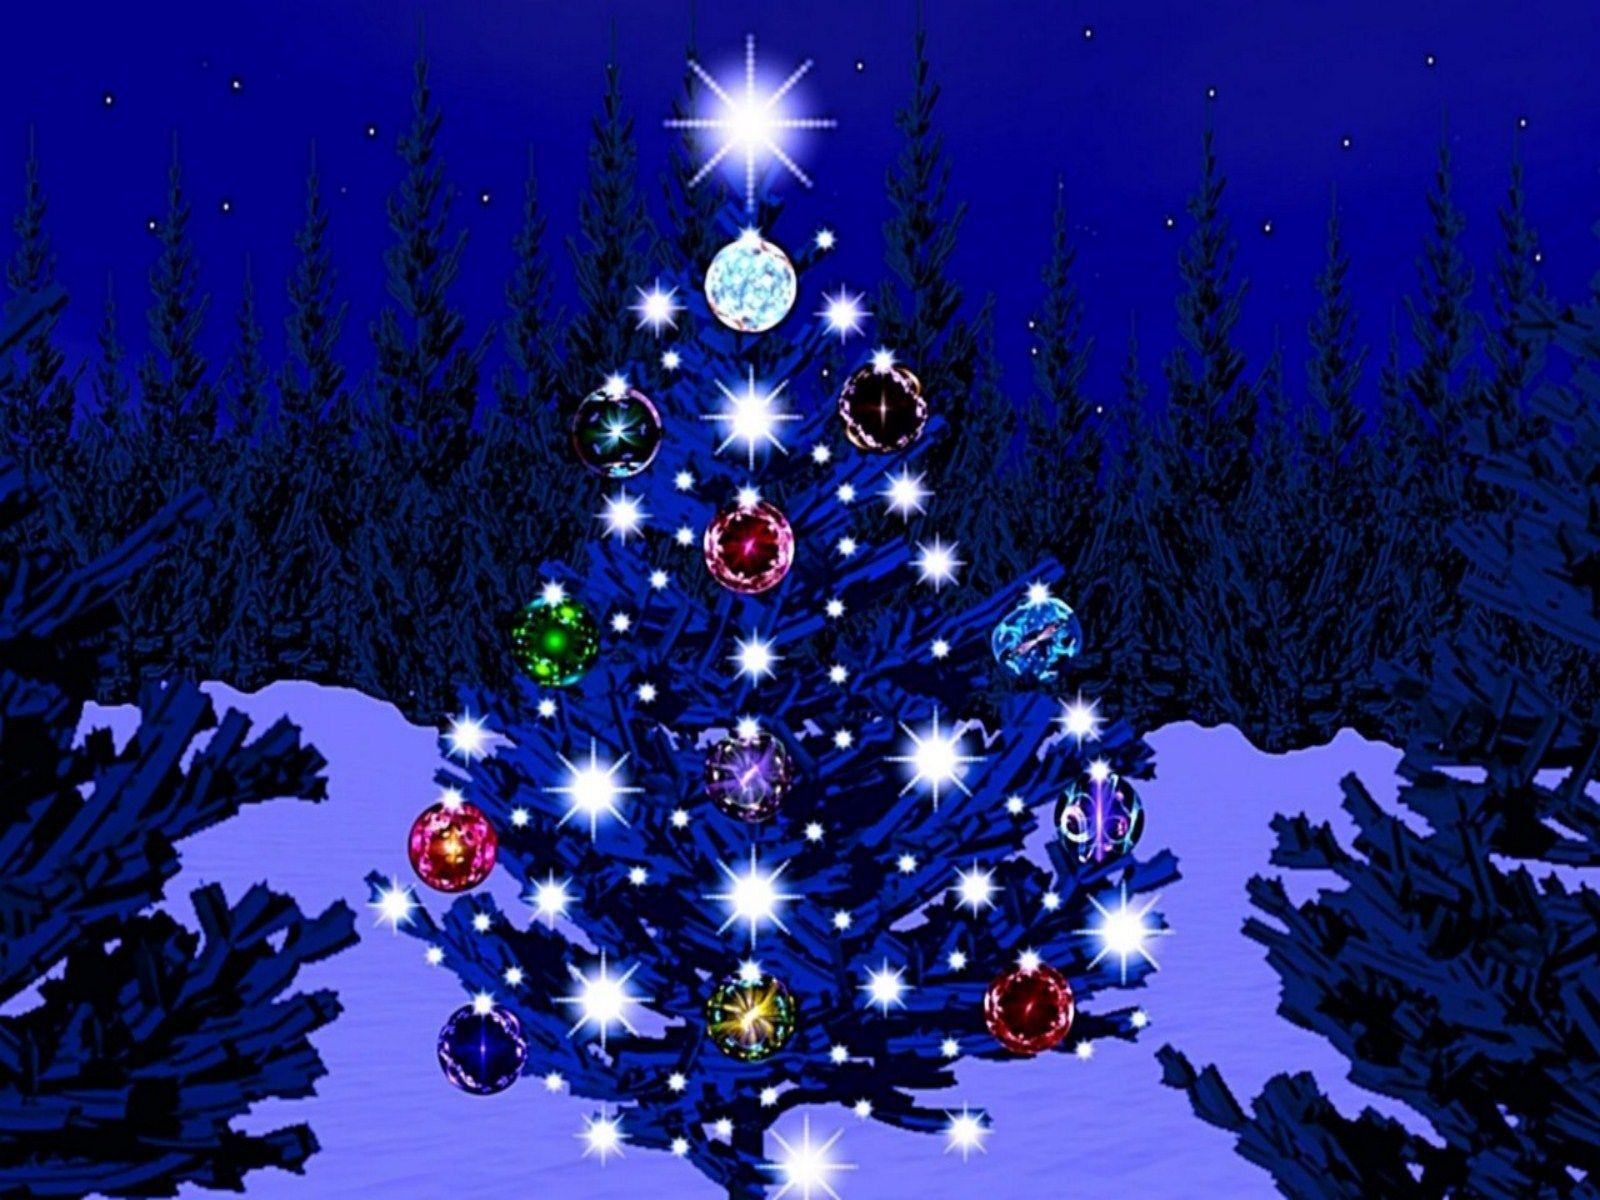 Blue Christmas Tree Lights Wallpaper. Christmas tree picture, Blue christmas tree, Christmas tree wallpaper